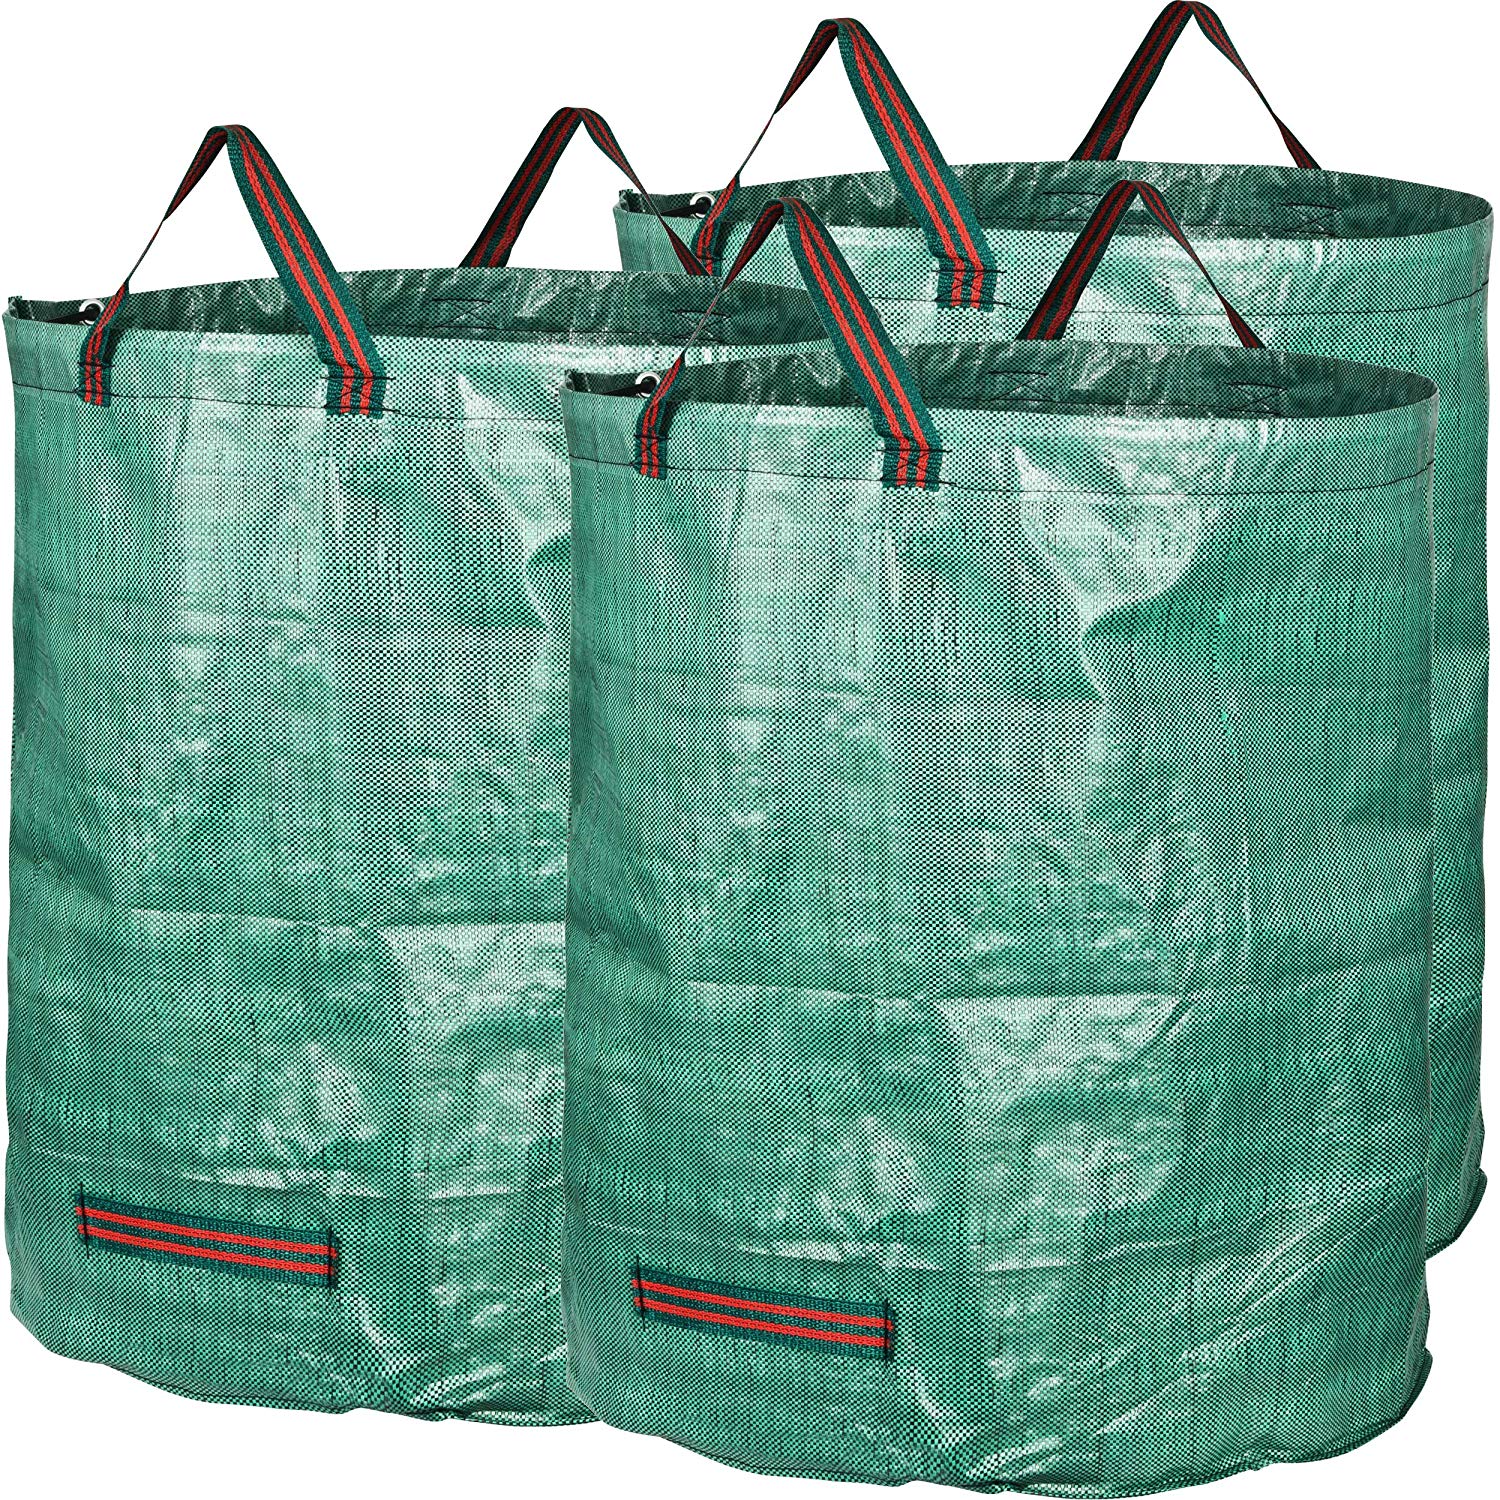 AIOIAI 3-Pack 72 Gallons Garden Waste Bags 